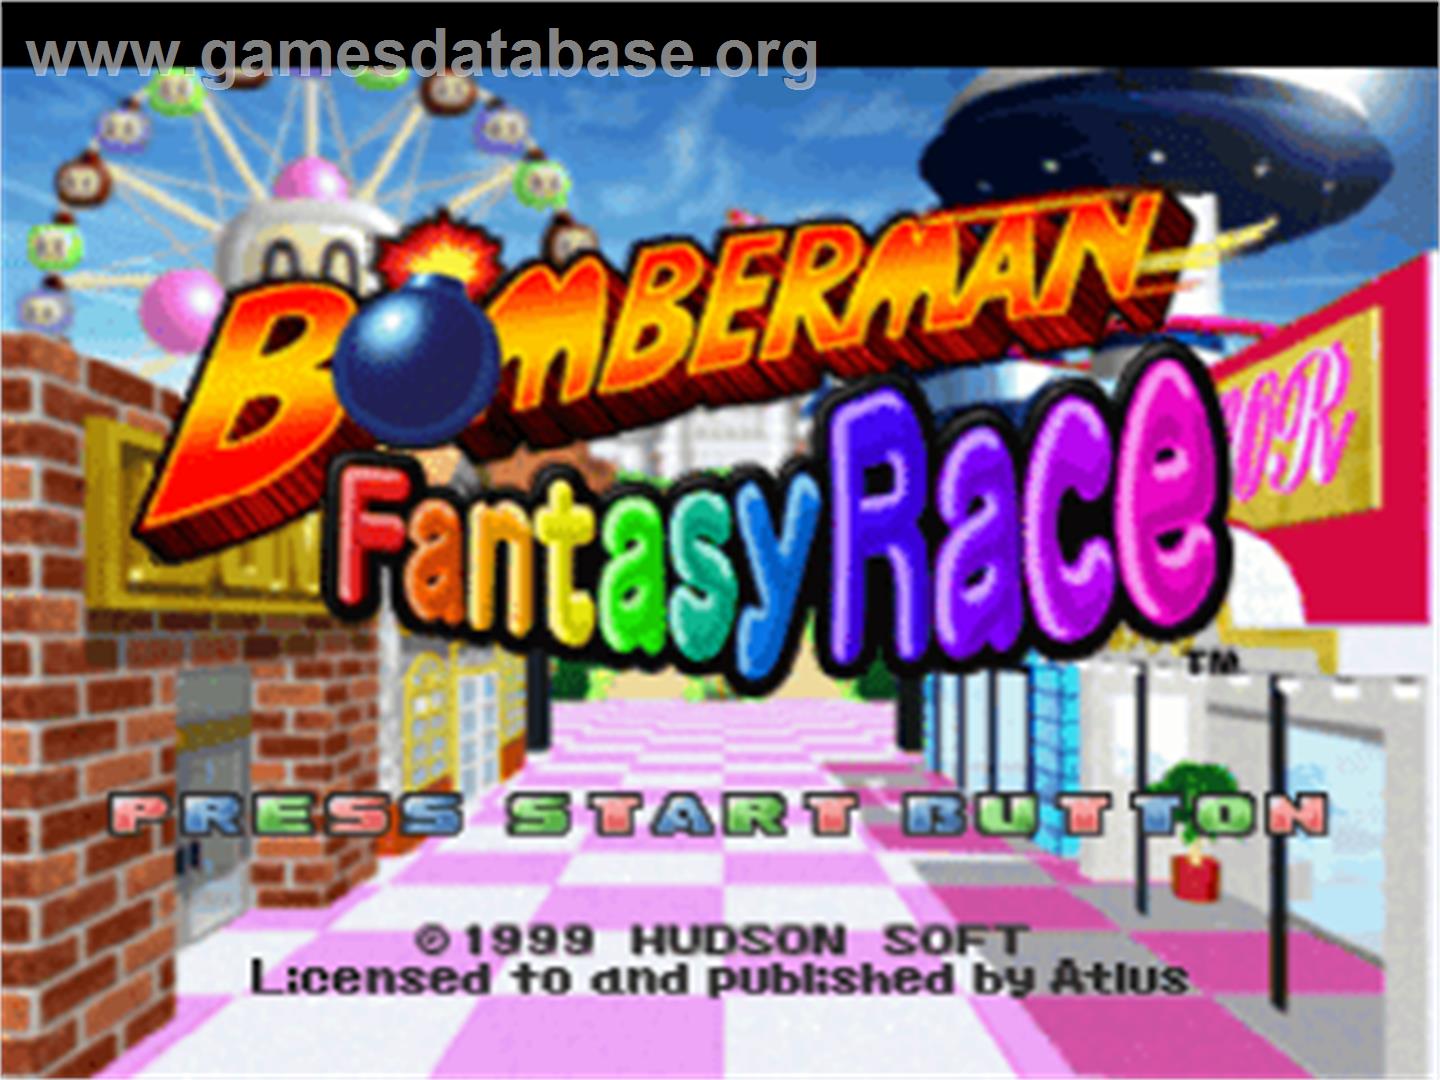 Bomberman Fantasy Race - Sony Playstation - Artwork - Title Screen